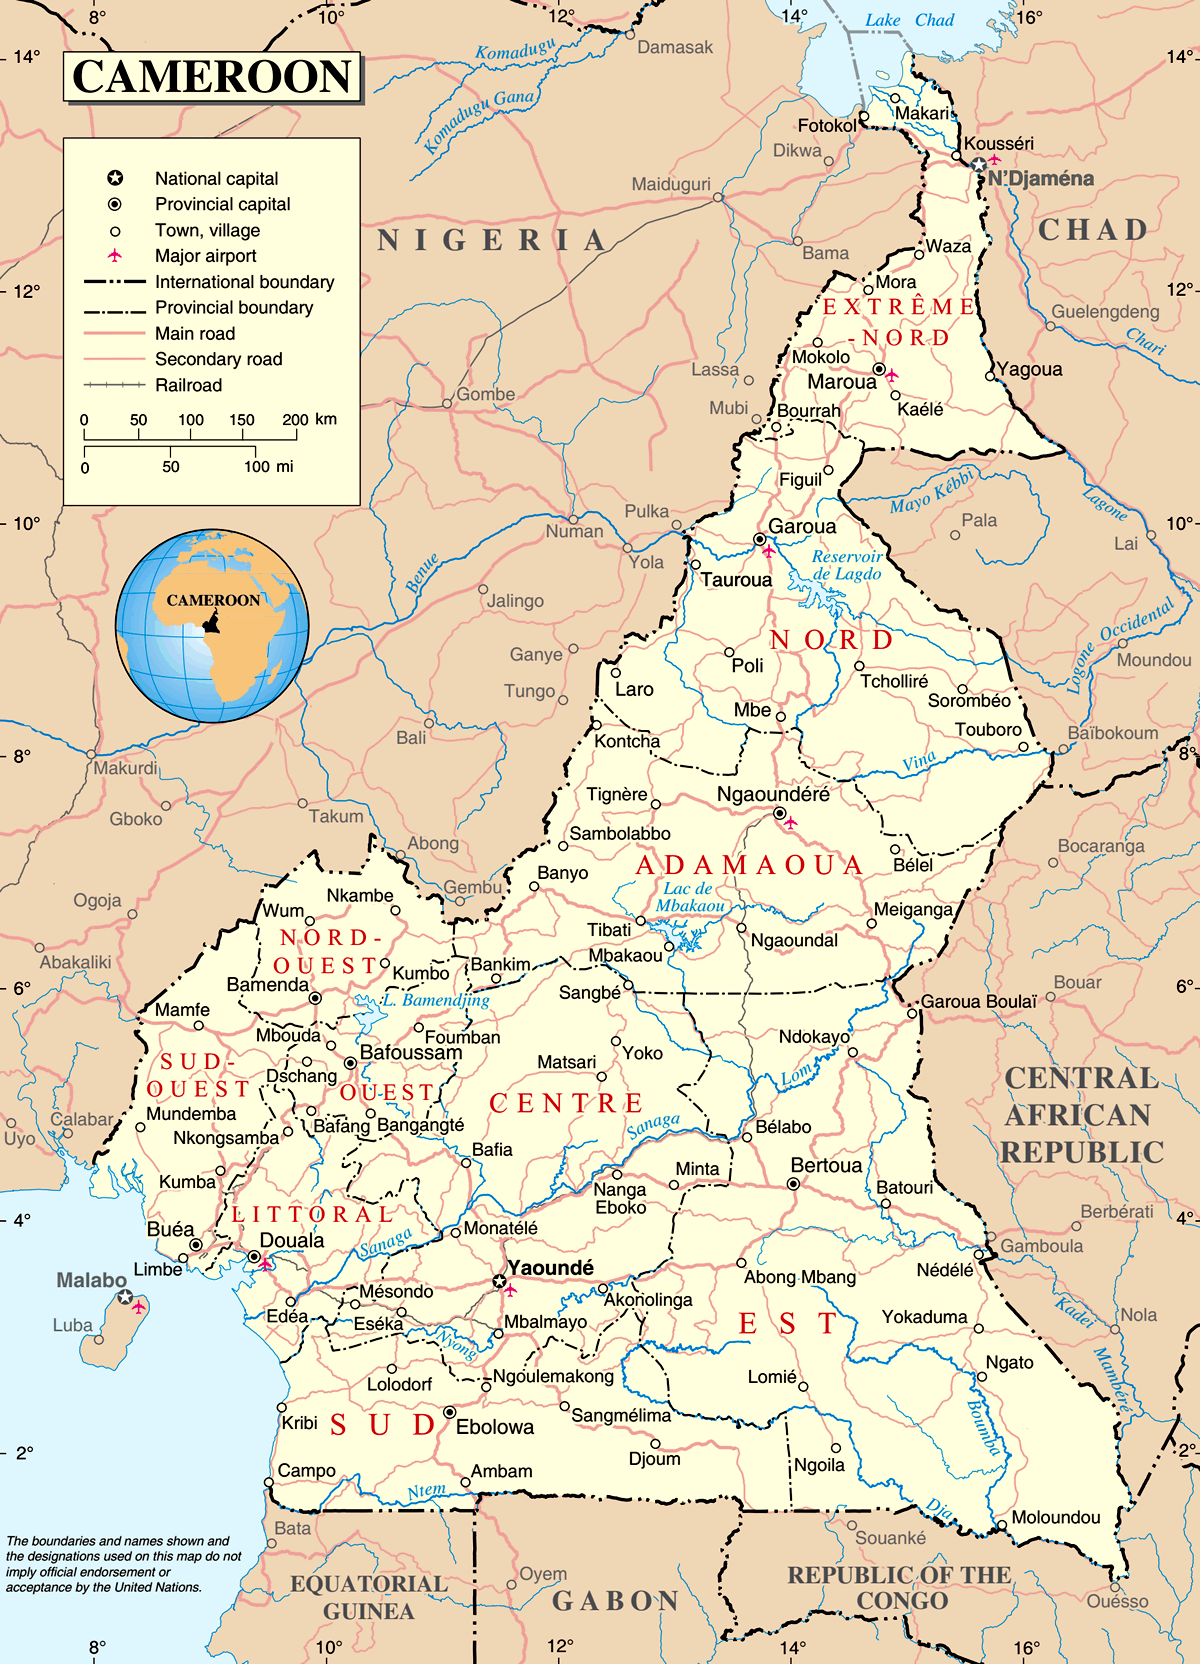 Mapa de Camarões